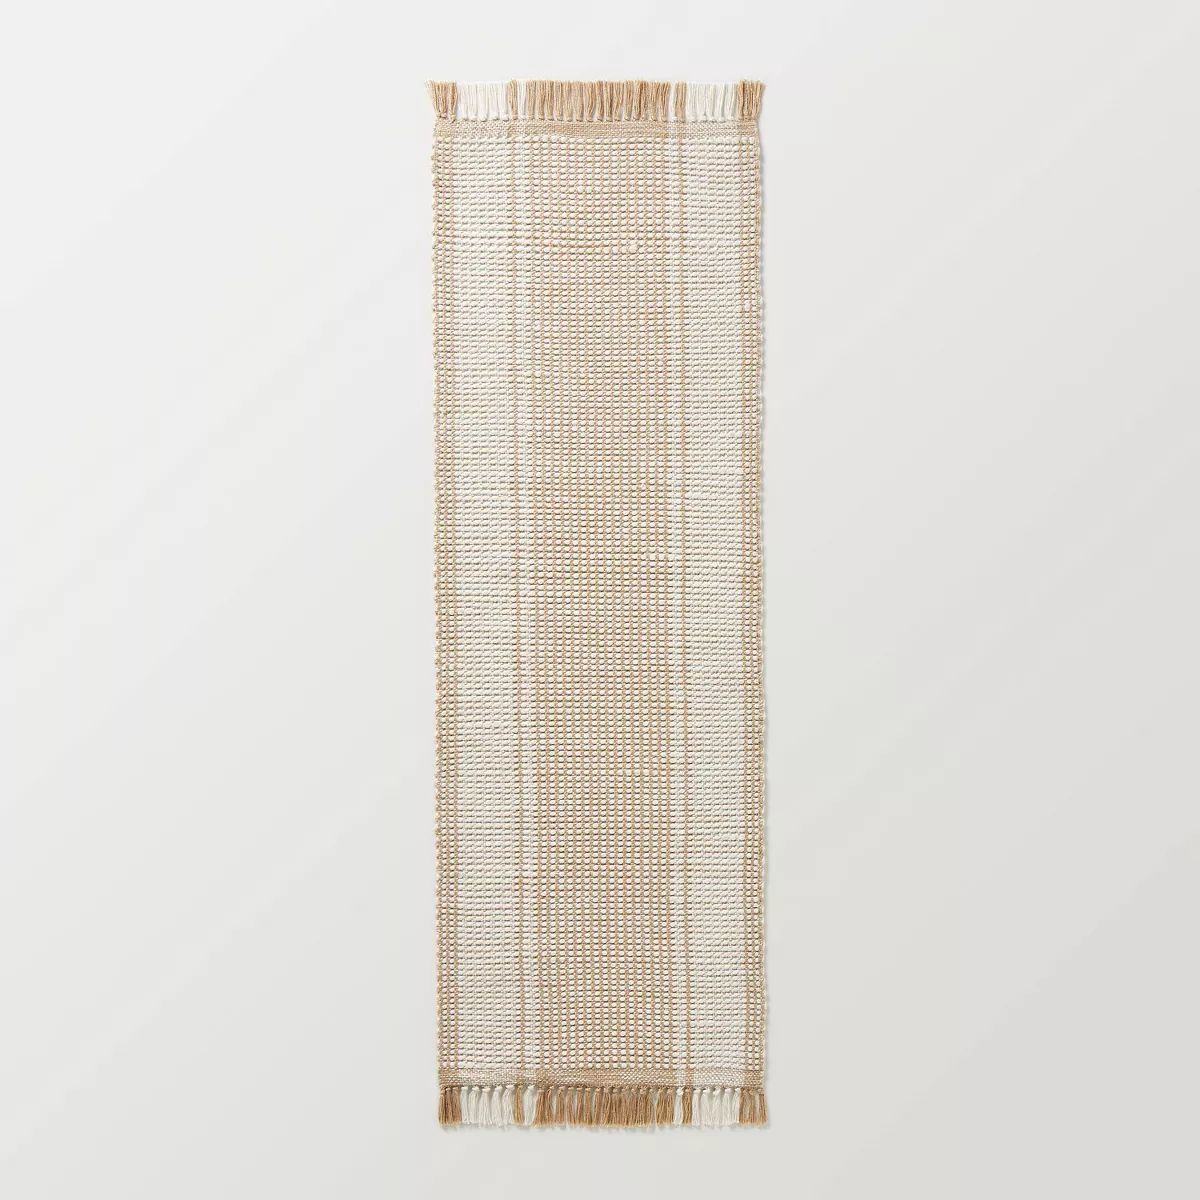 Wide Border Stripe Handmade Woven Area Rug Tan/Cream - Hearth & Hand™ with Magnolia | Target